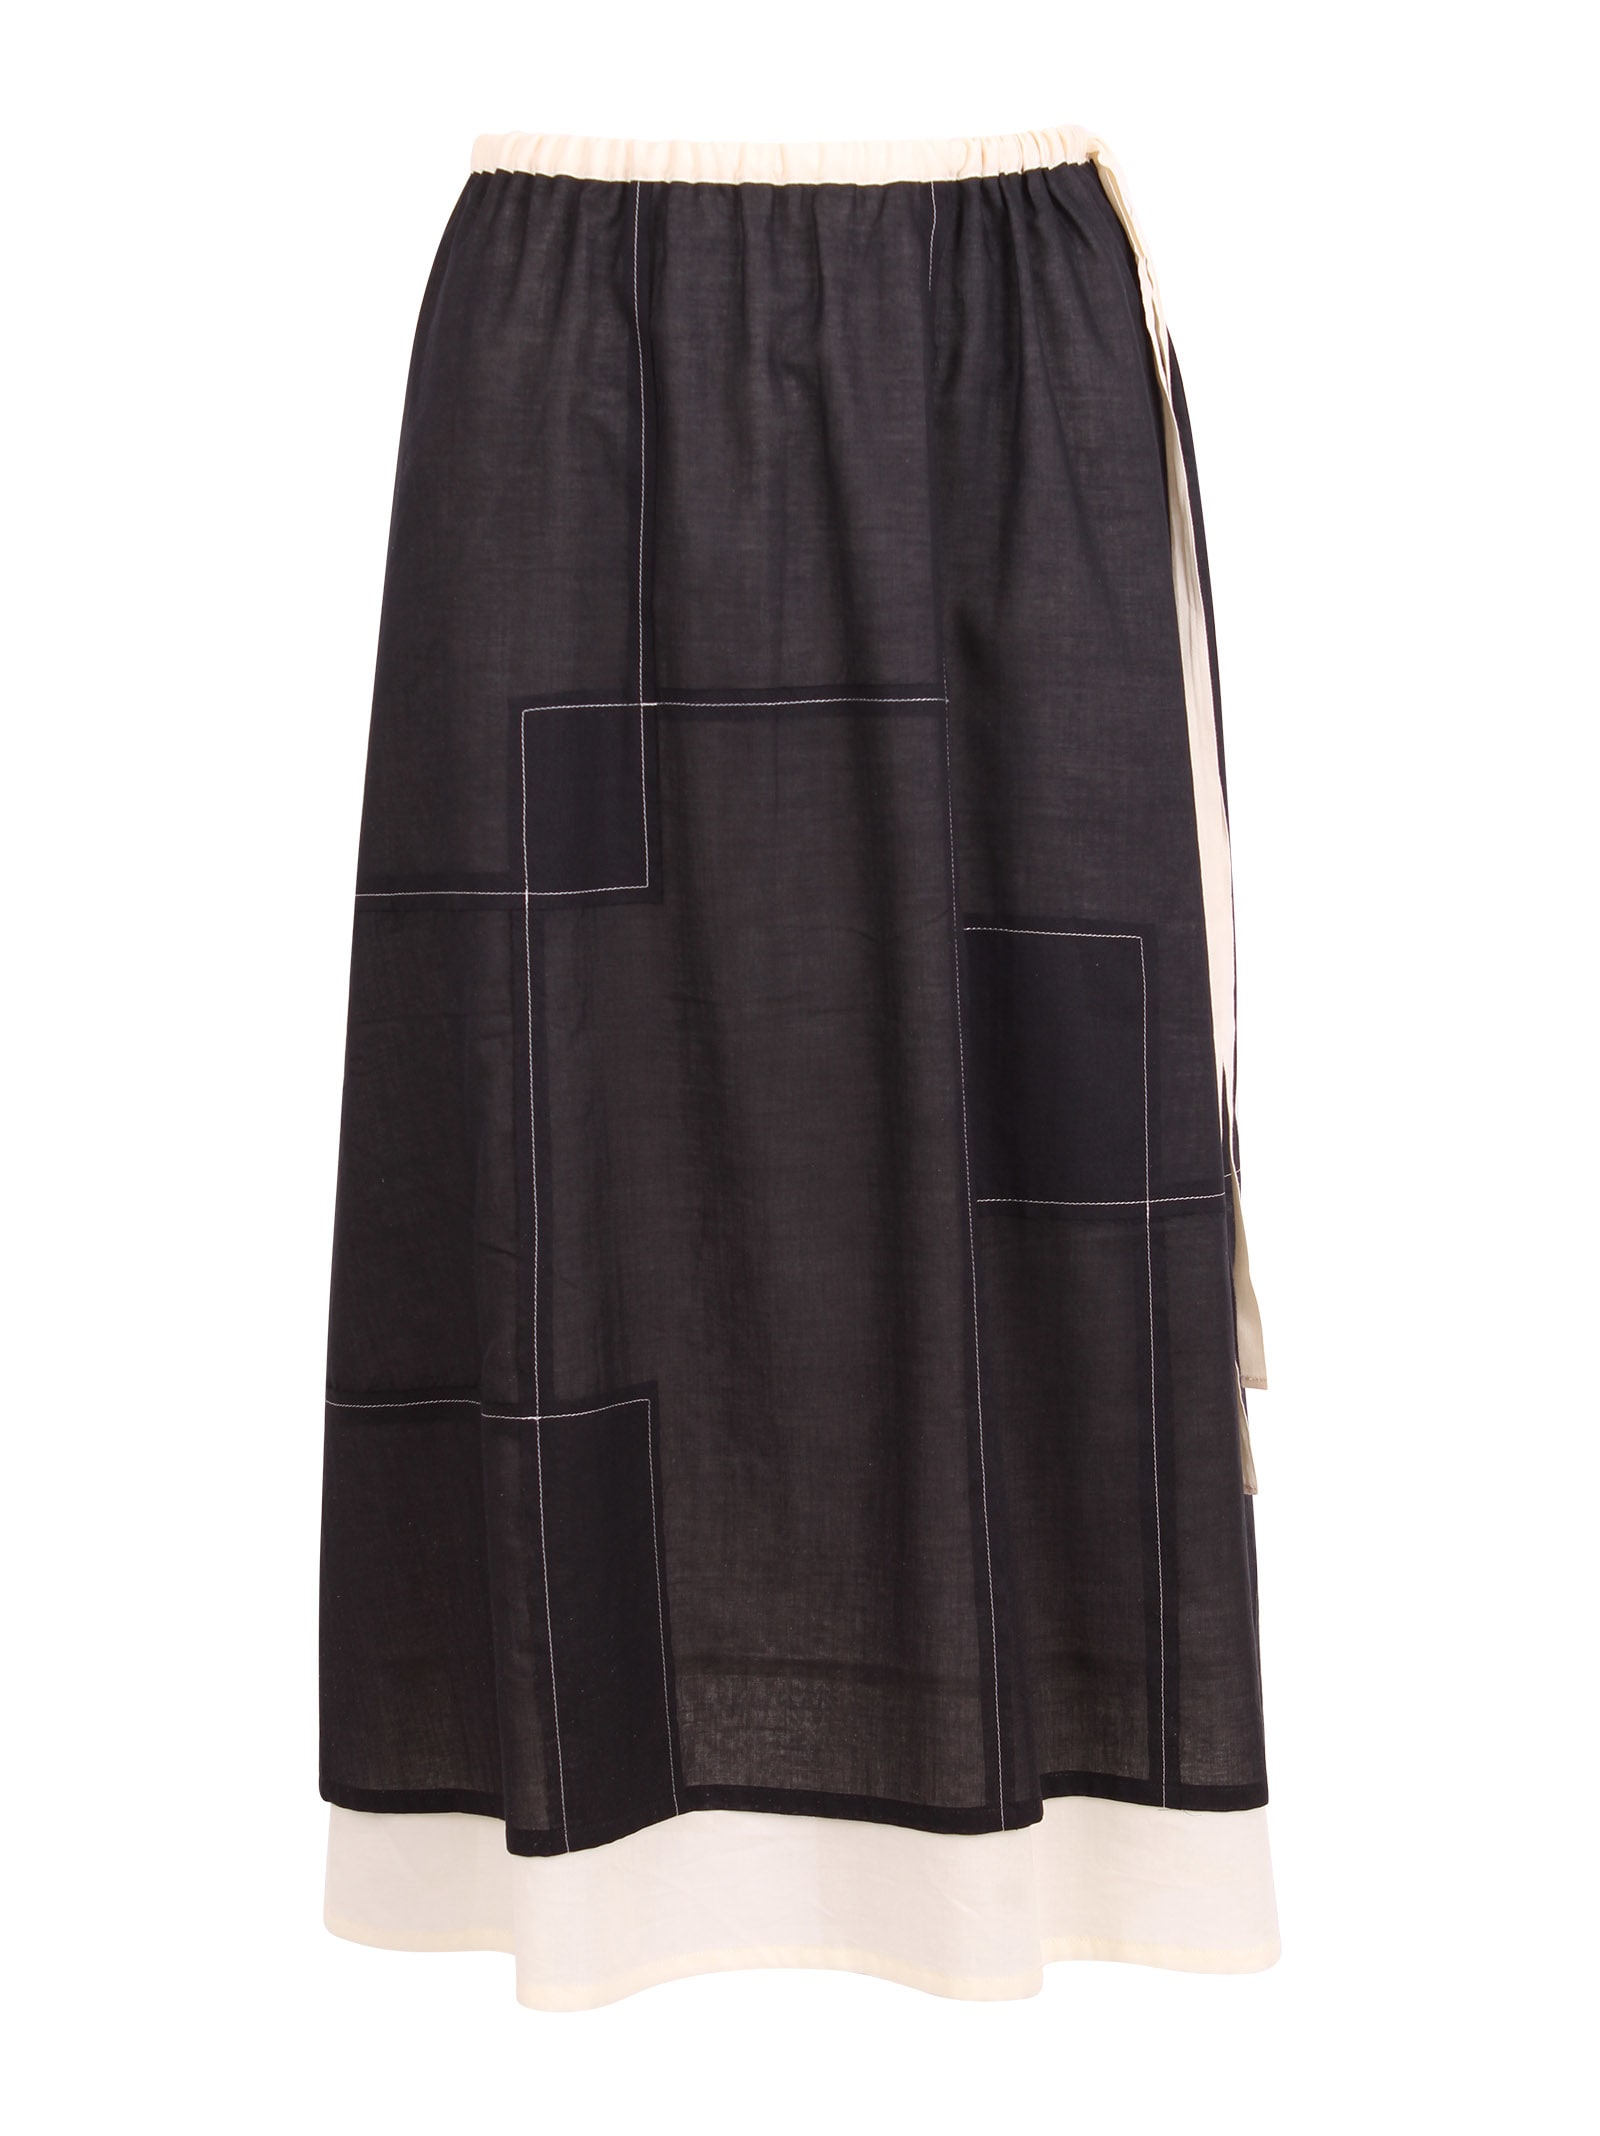 Yoshi Kondo hill Layrered Cotton Skirt